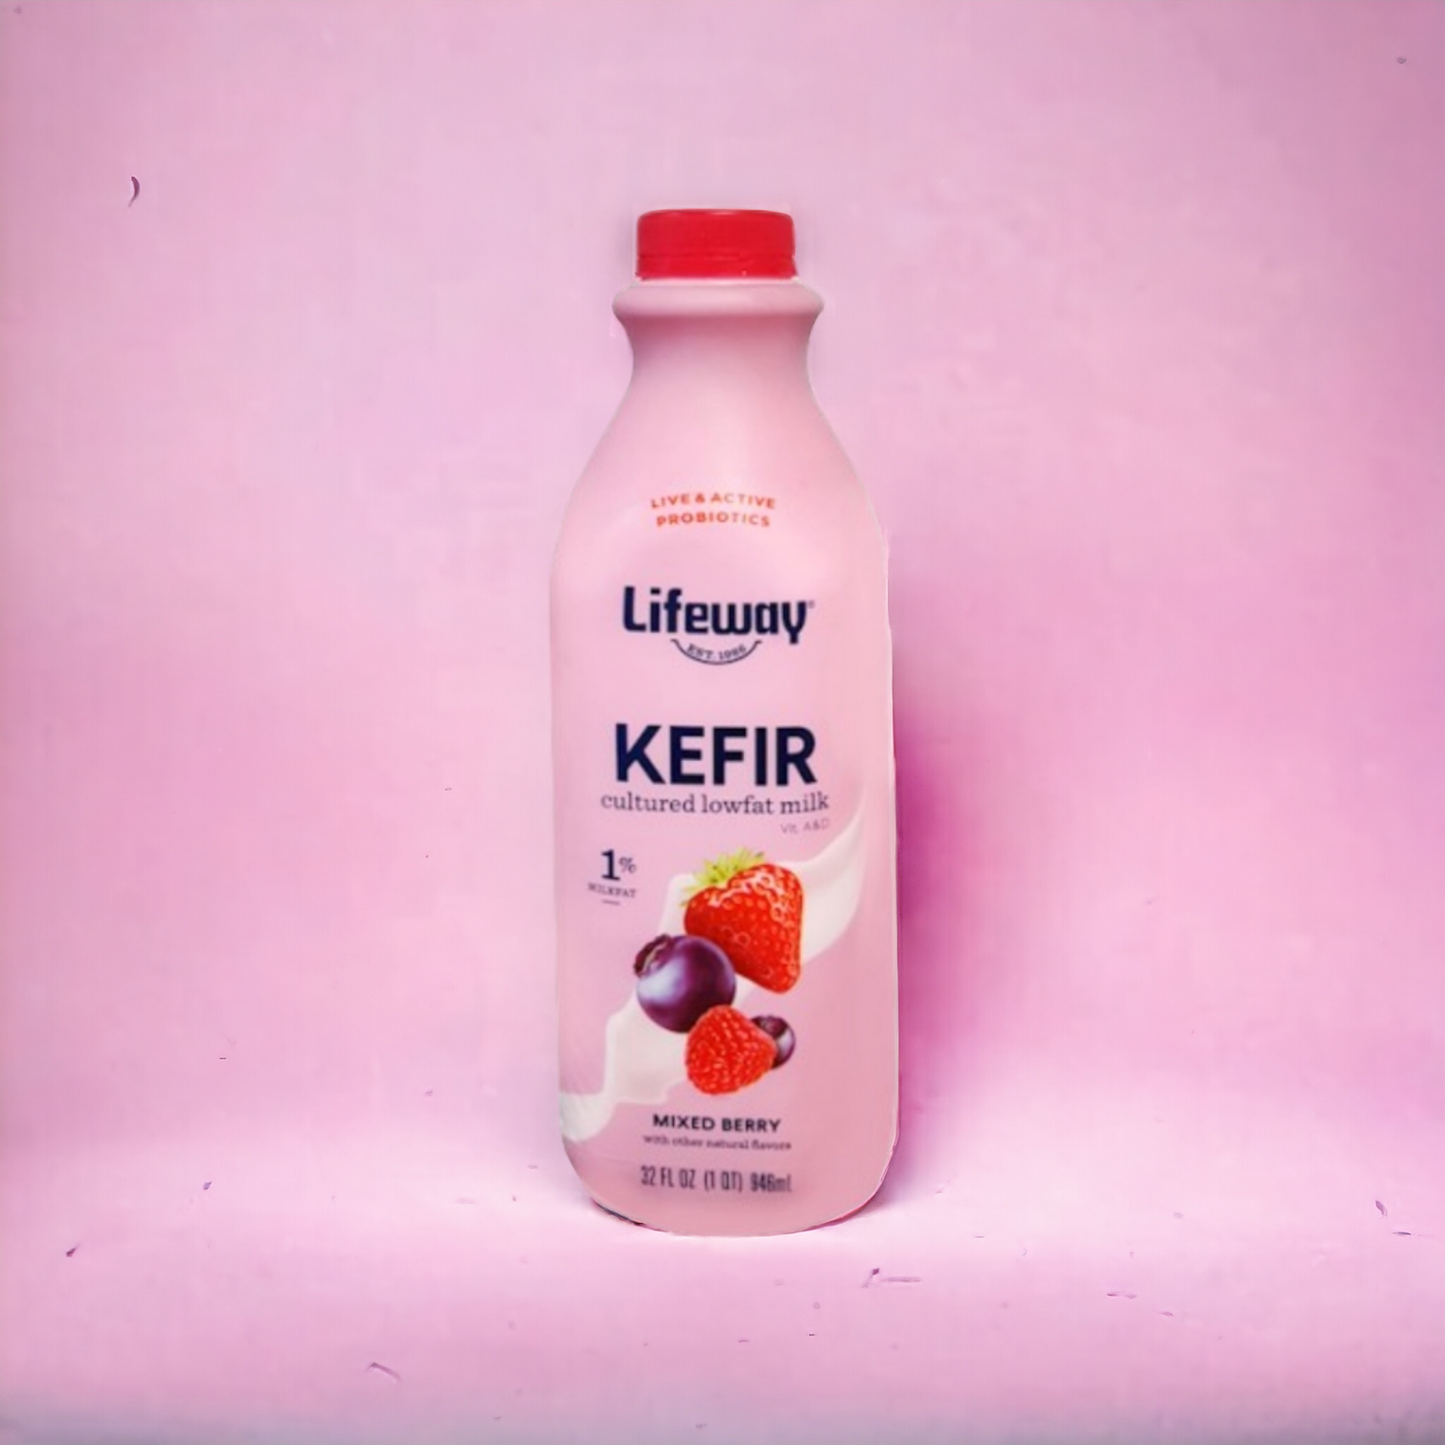 Kefir - Lifeway - Low-Fat Kefir - Mixed Berry - 32oz